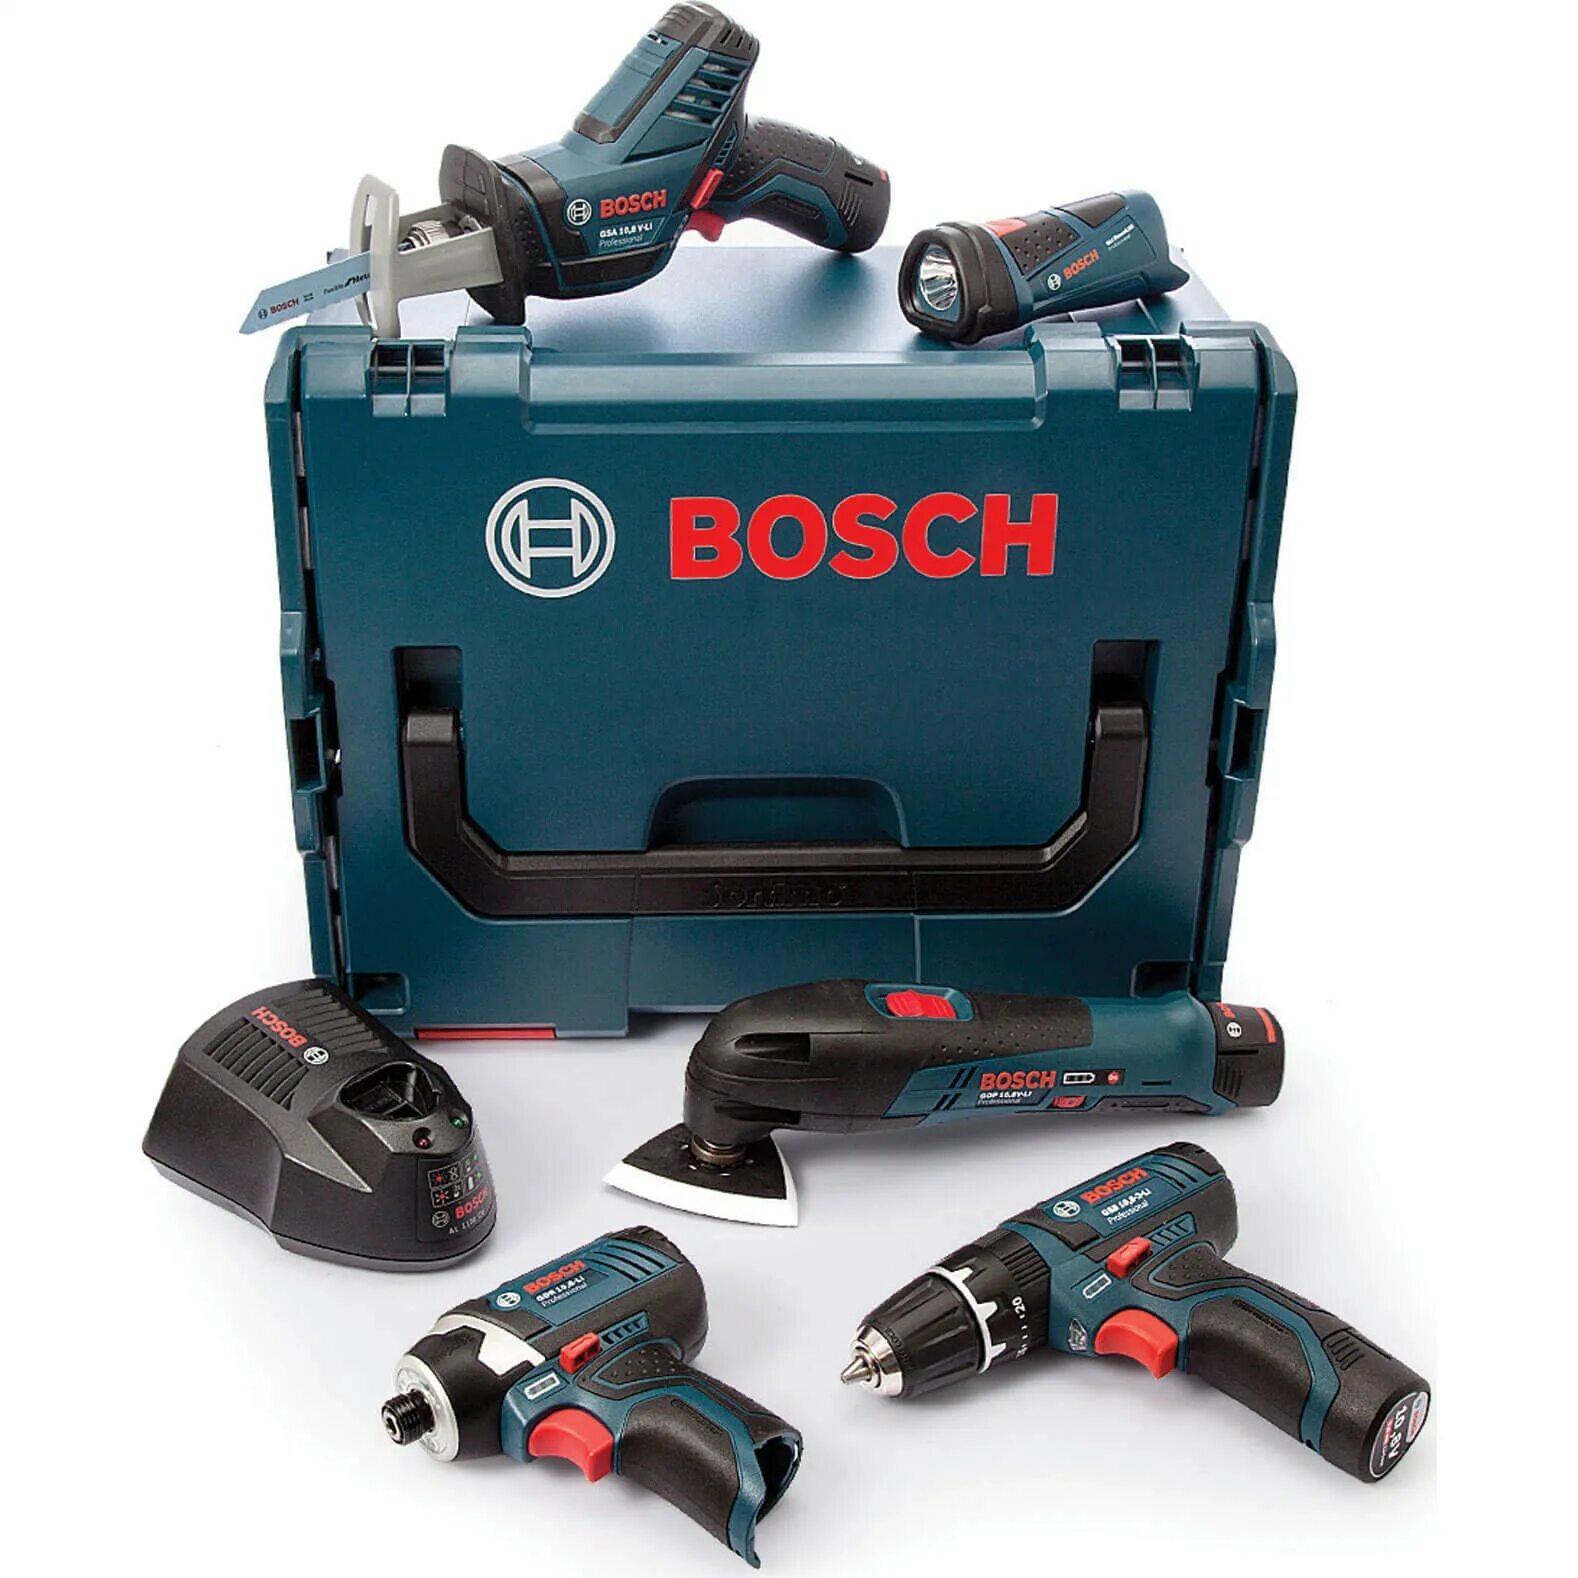 Бош повер. Аккумуляторный инструмент Bosch 12v professional. Bosch professional GSB 12v-10. Линейка аккумуляторного инструмента Bosch 12v. Линейка Bosch 12v professional.